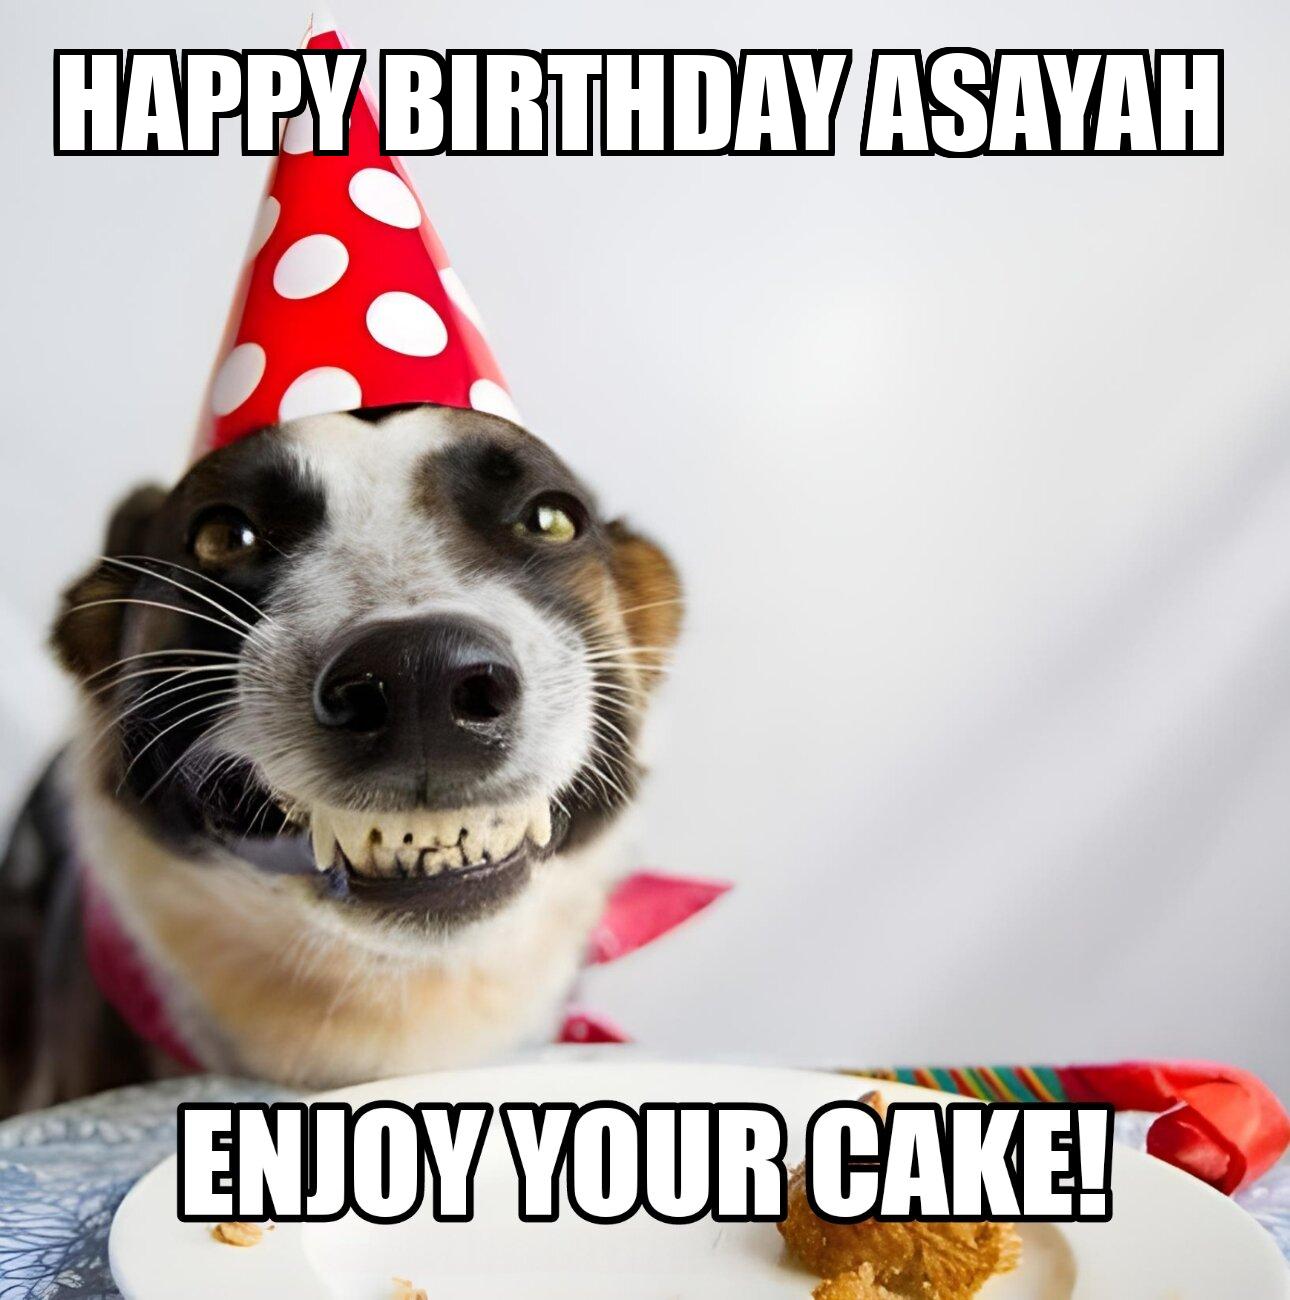 Happy Birthday Asayah Enjoy Your Cake Dog Meme